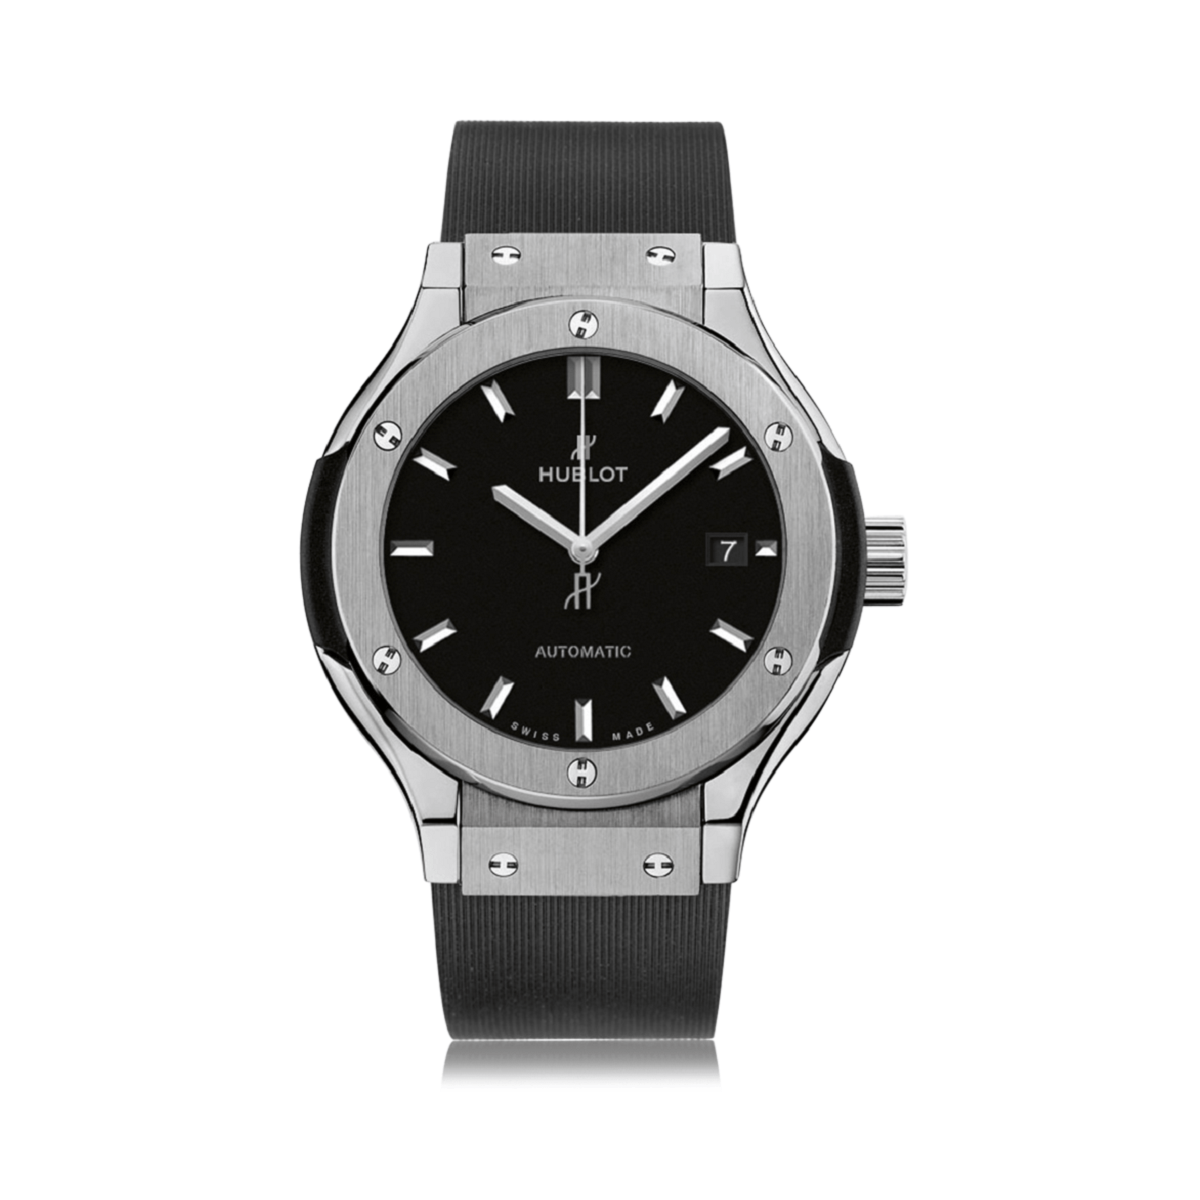 Hublot Classic Fusion Automatic Date Titanium Black Dial Watch - 582.NX.1170.RX